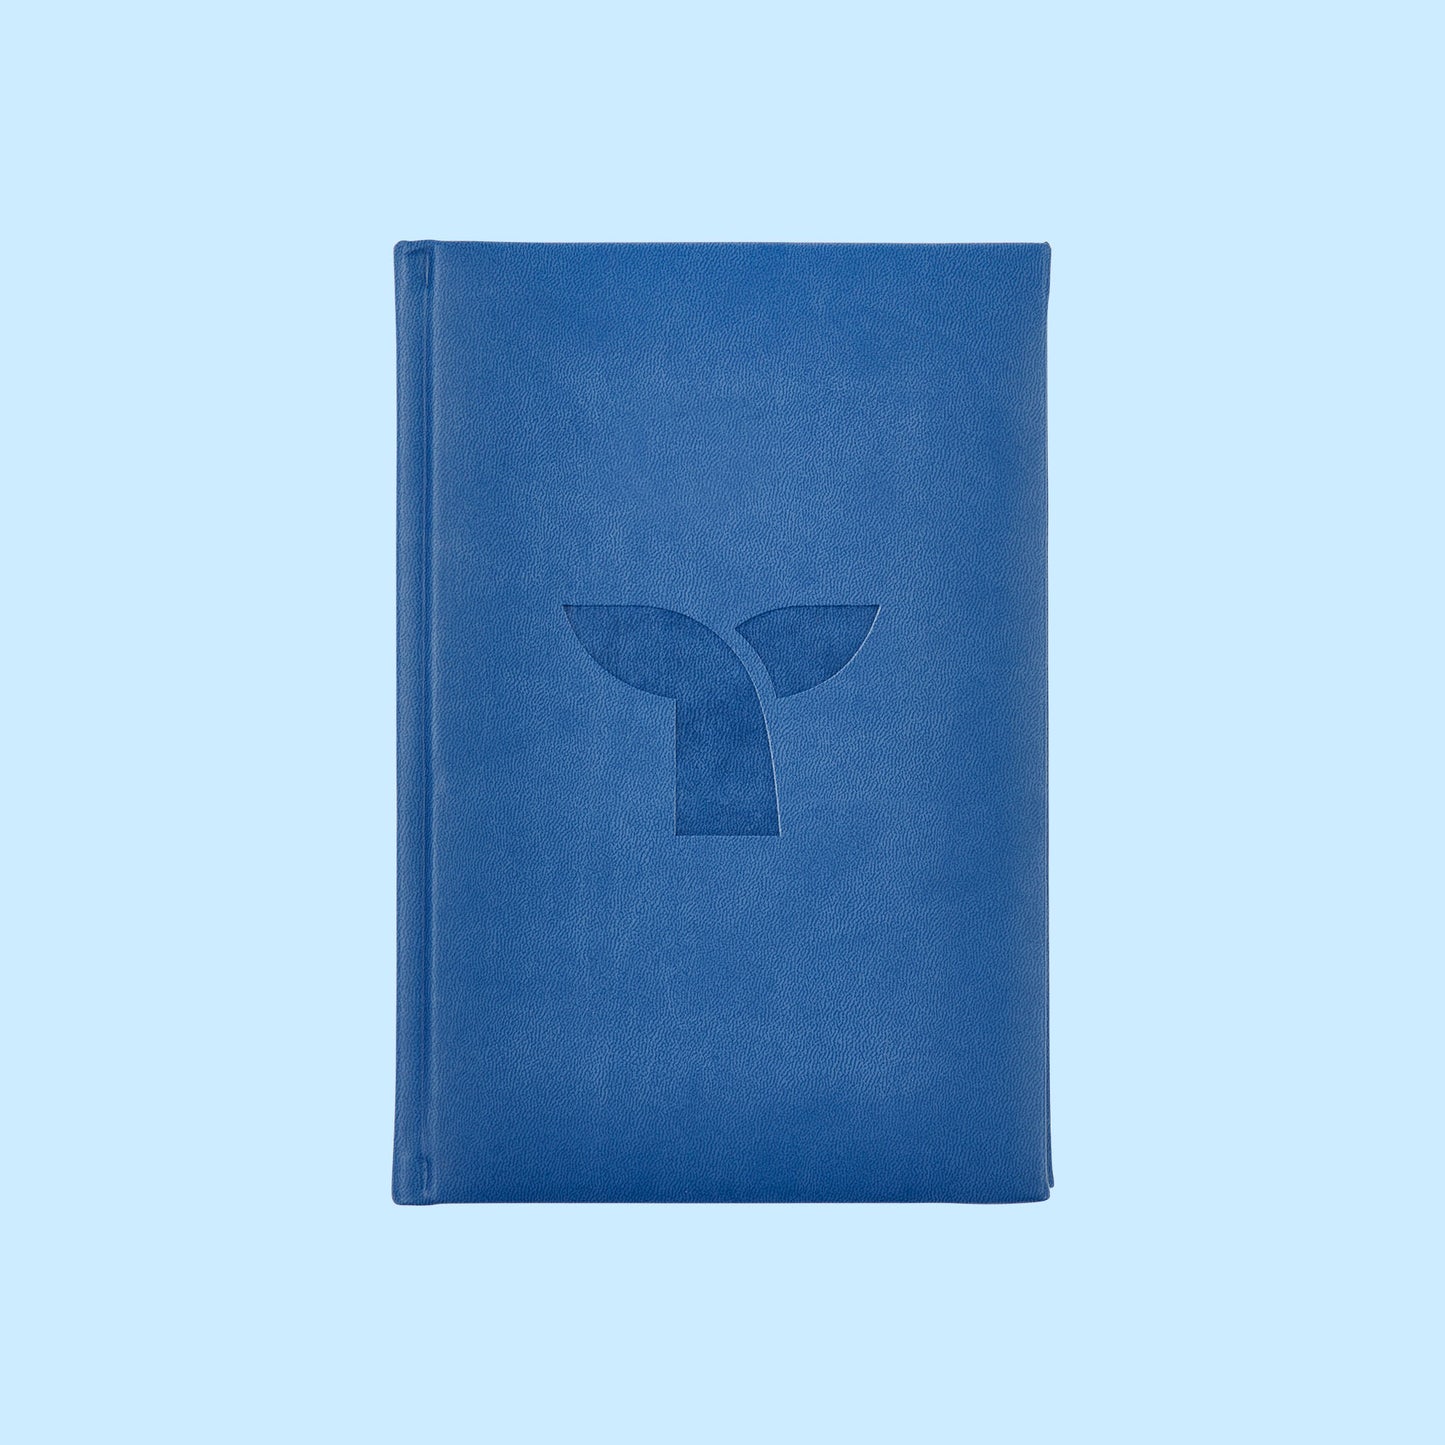 Triple Whale logomark debossed on front of blue journal